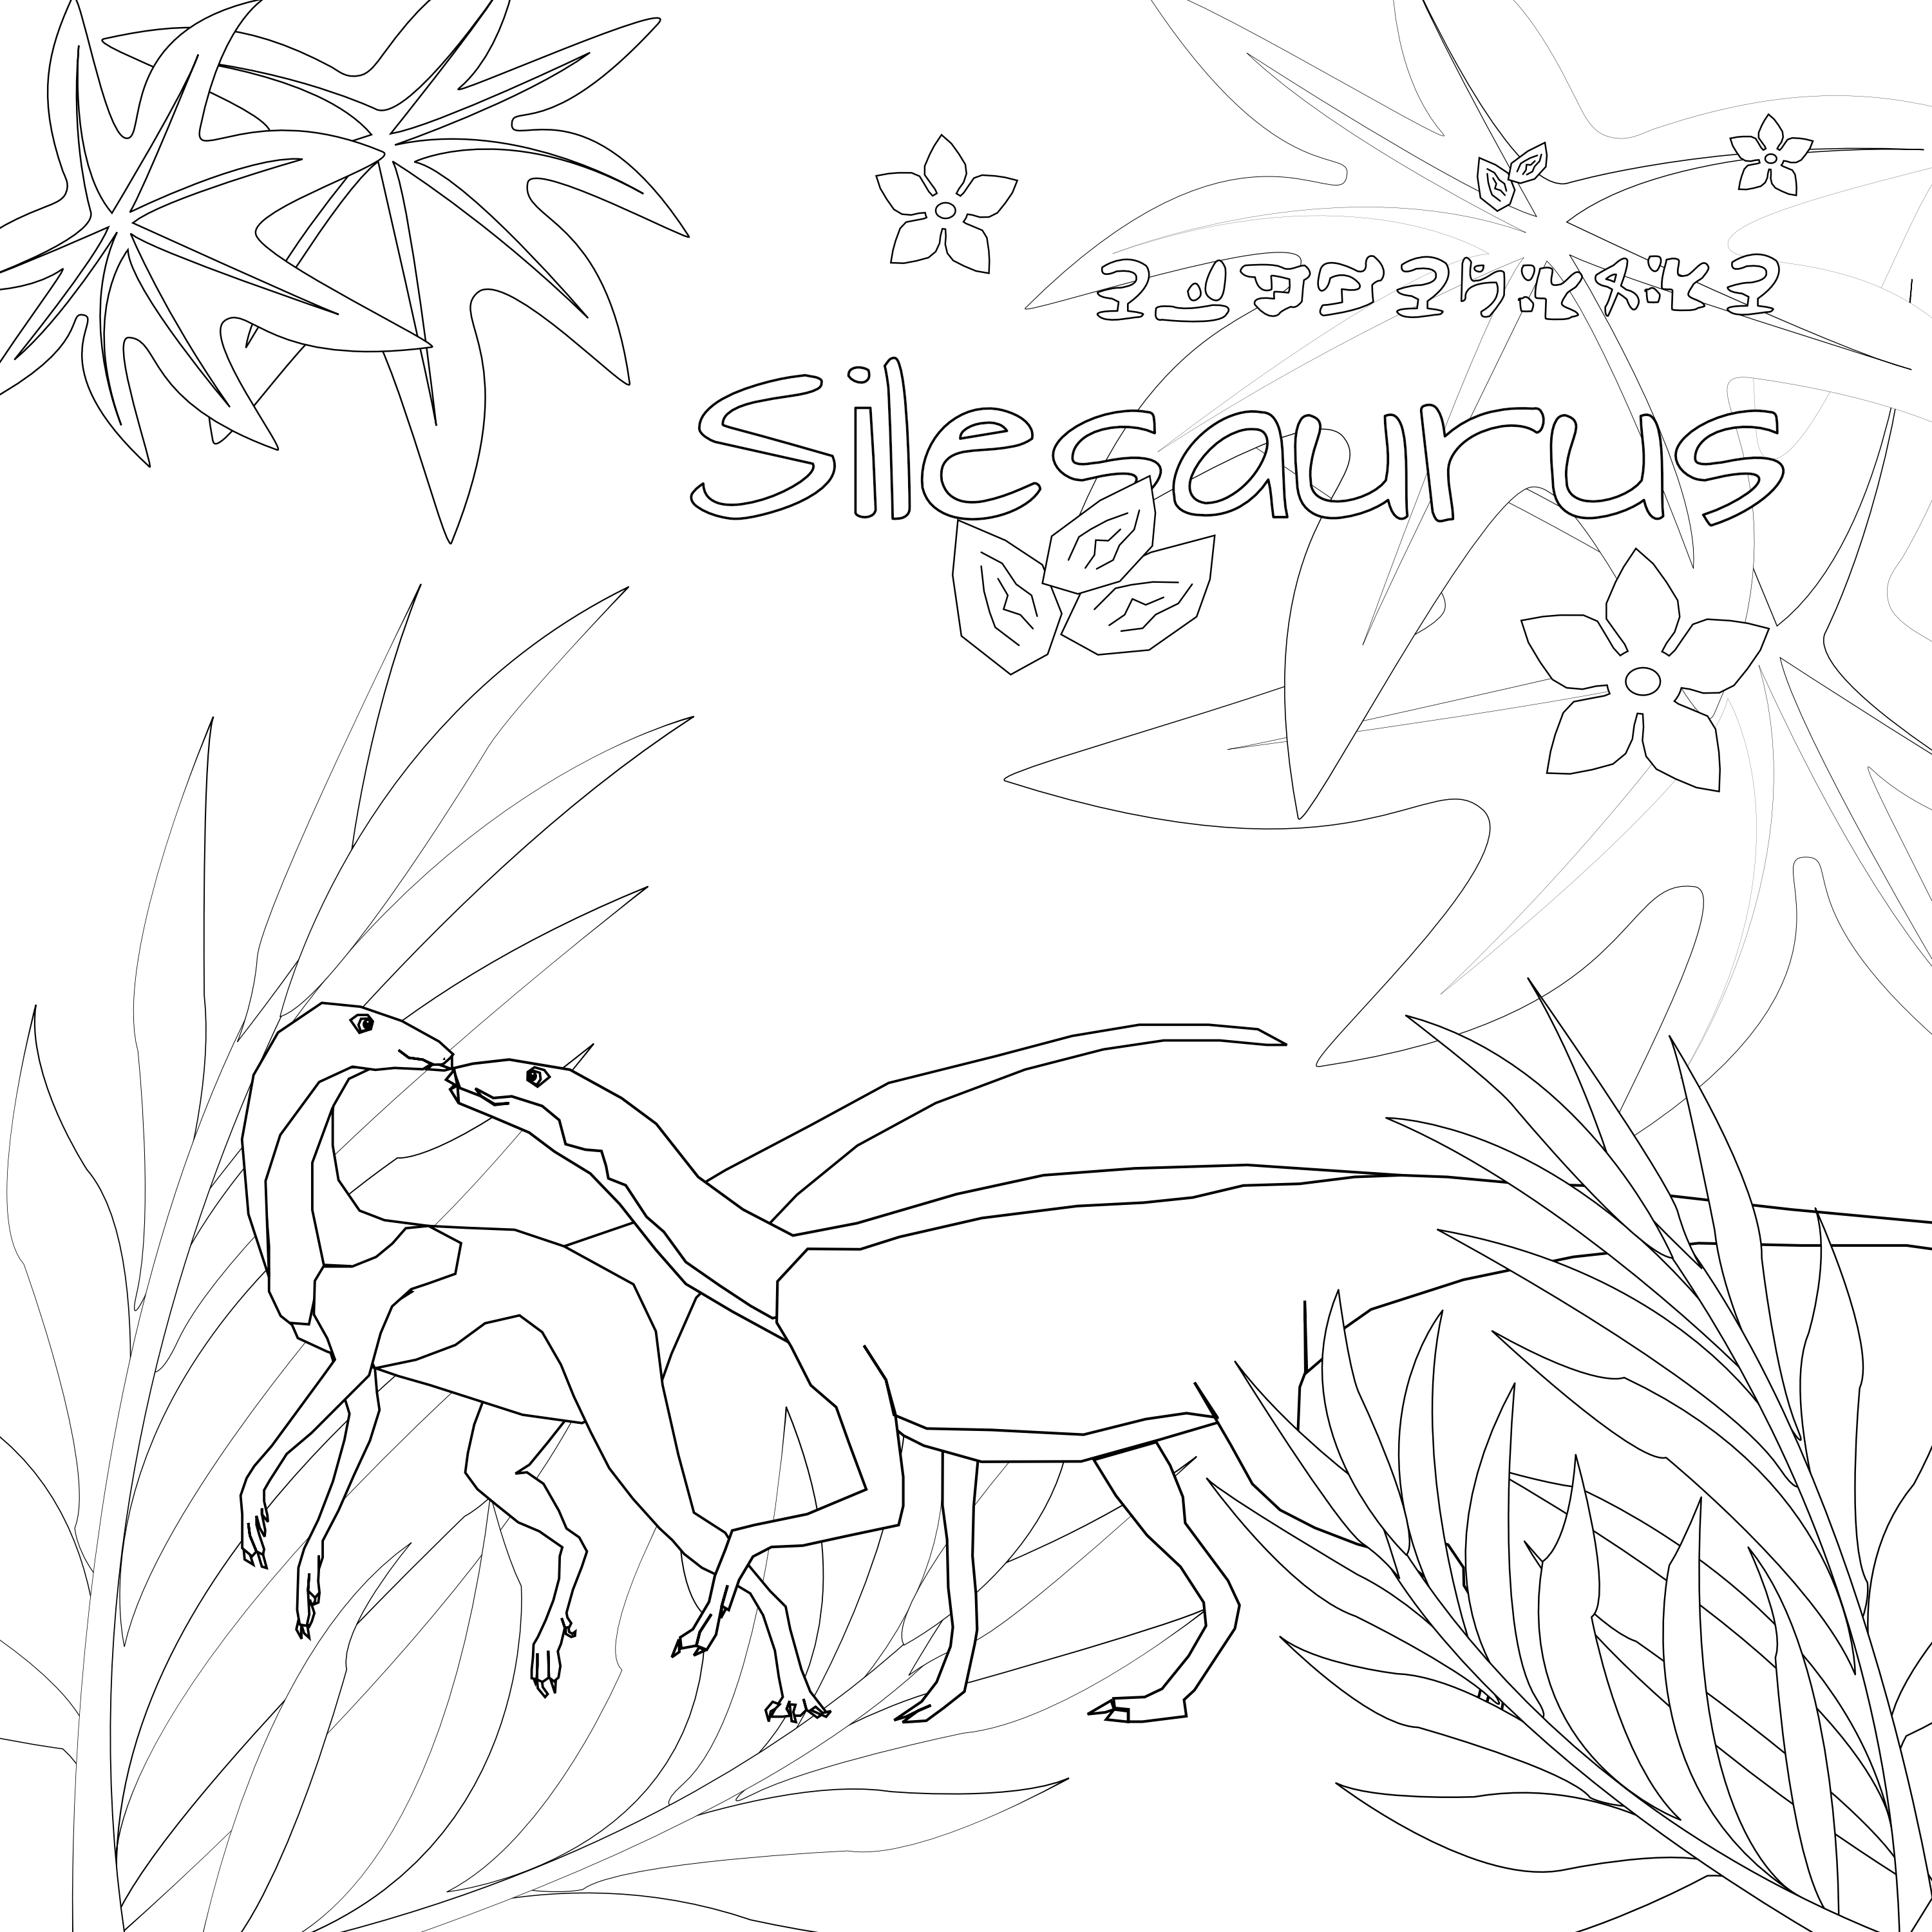 Coloring page silesaurus